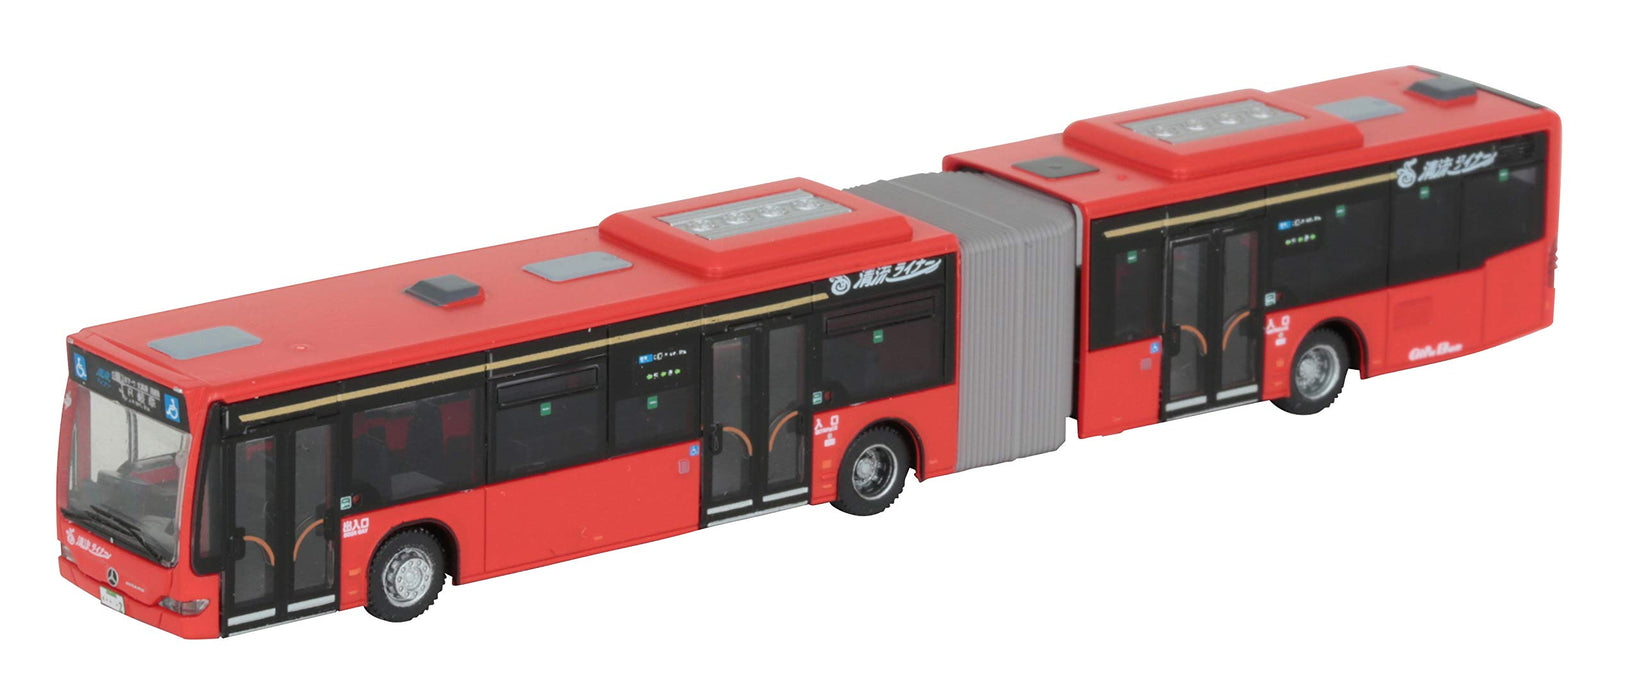 Tomytec Gifu Bus Seiryu Liner - Fournitures de diorama en édition limitée de la collection Bus